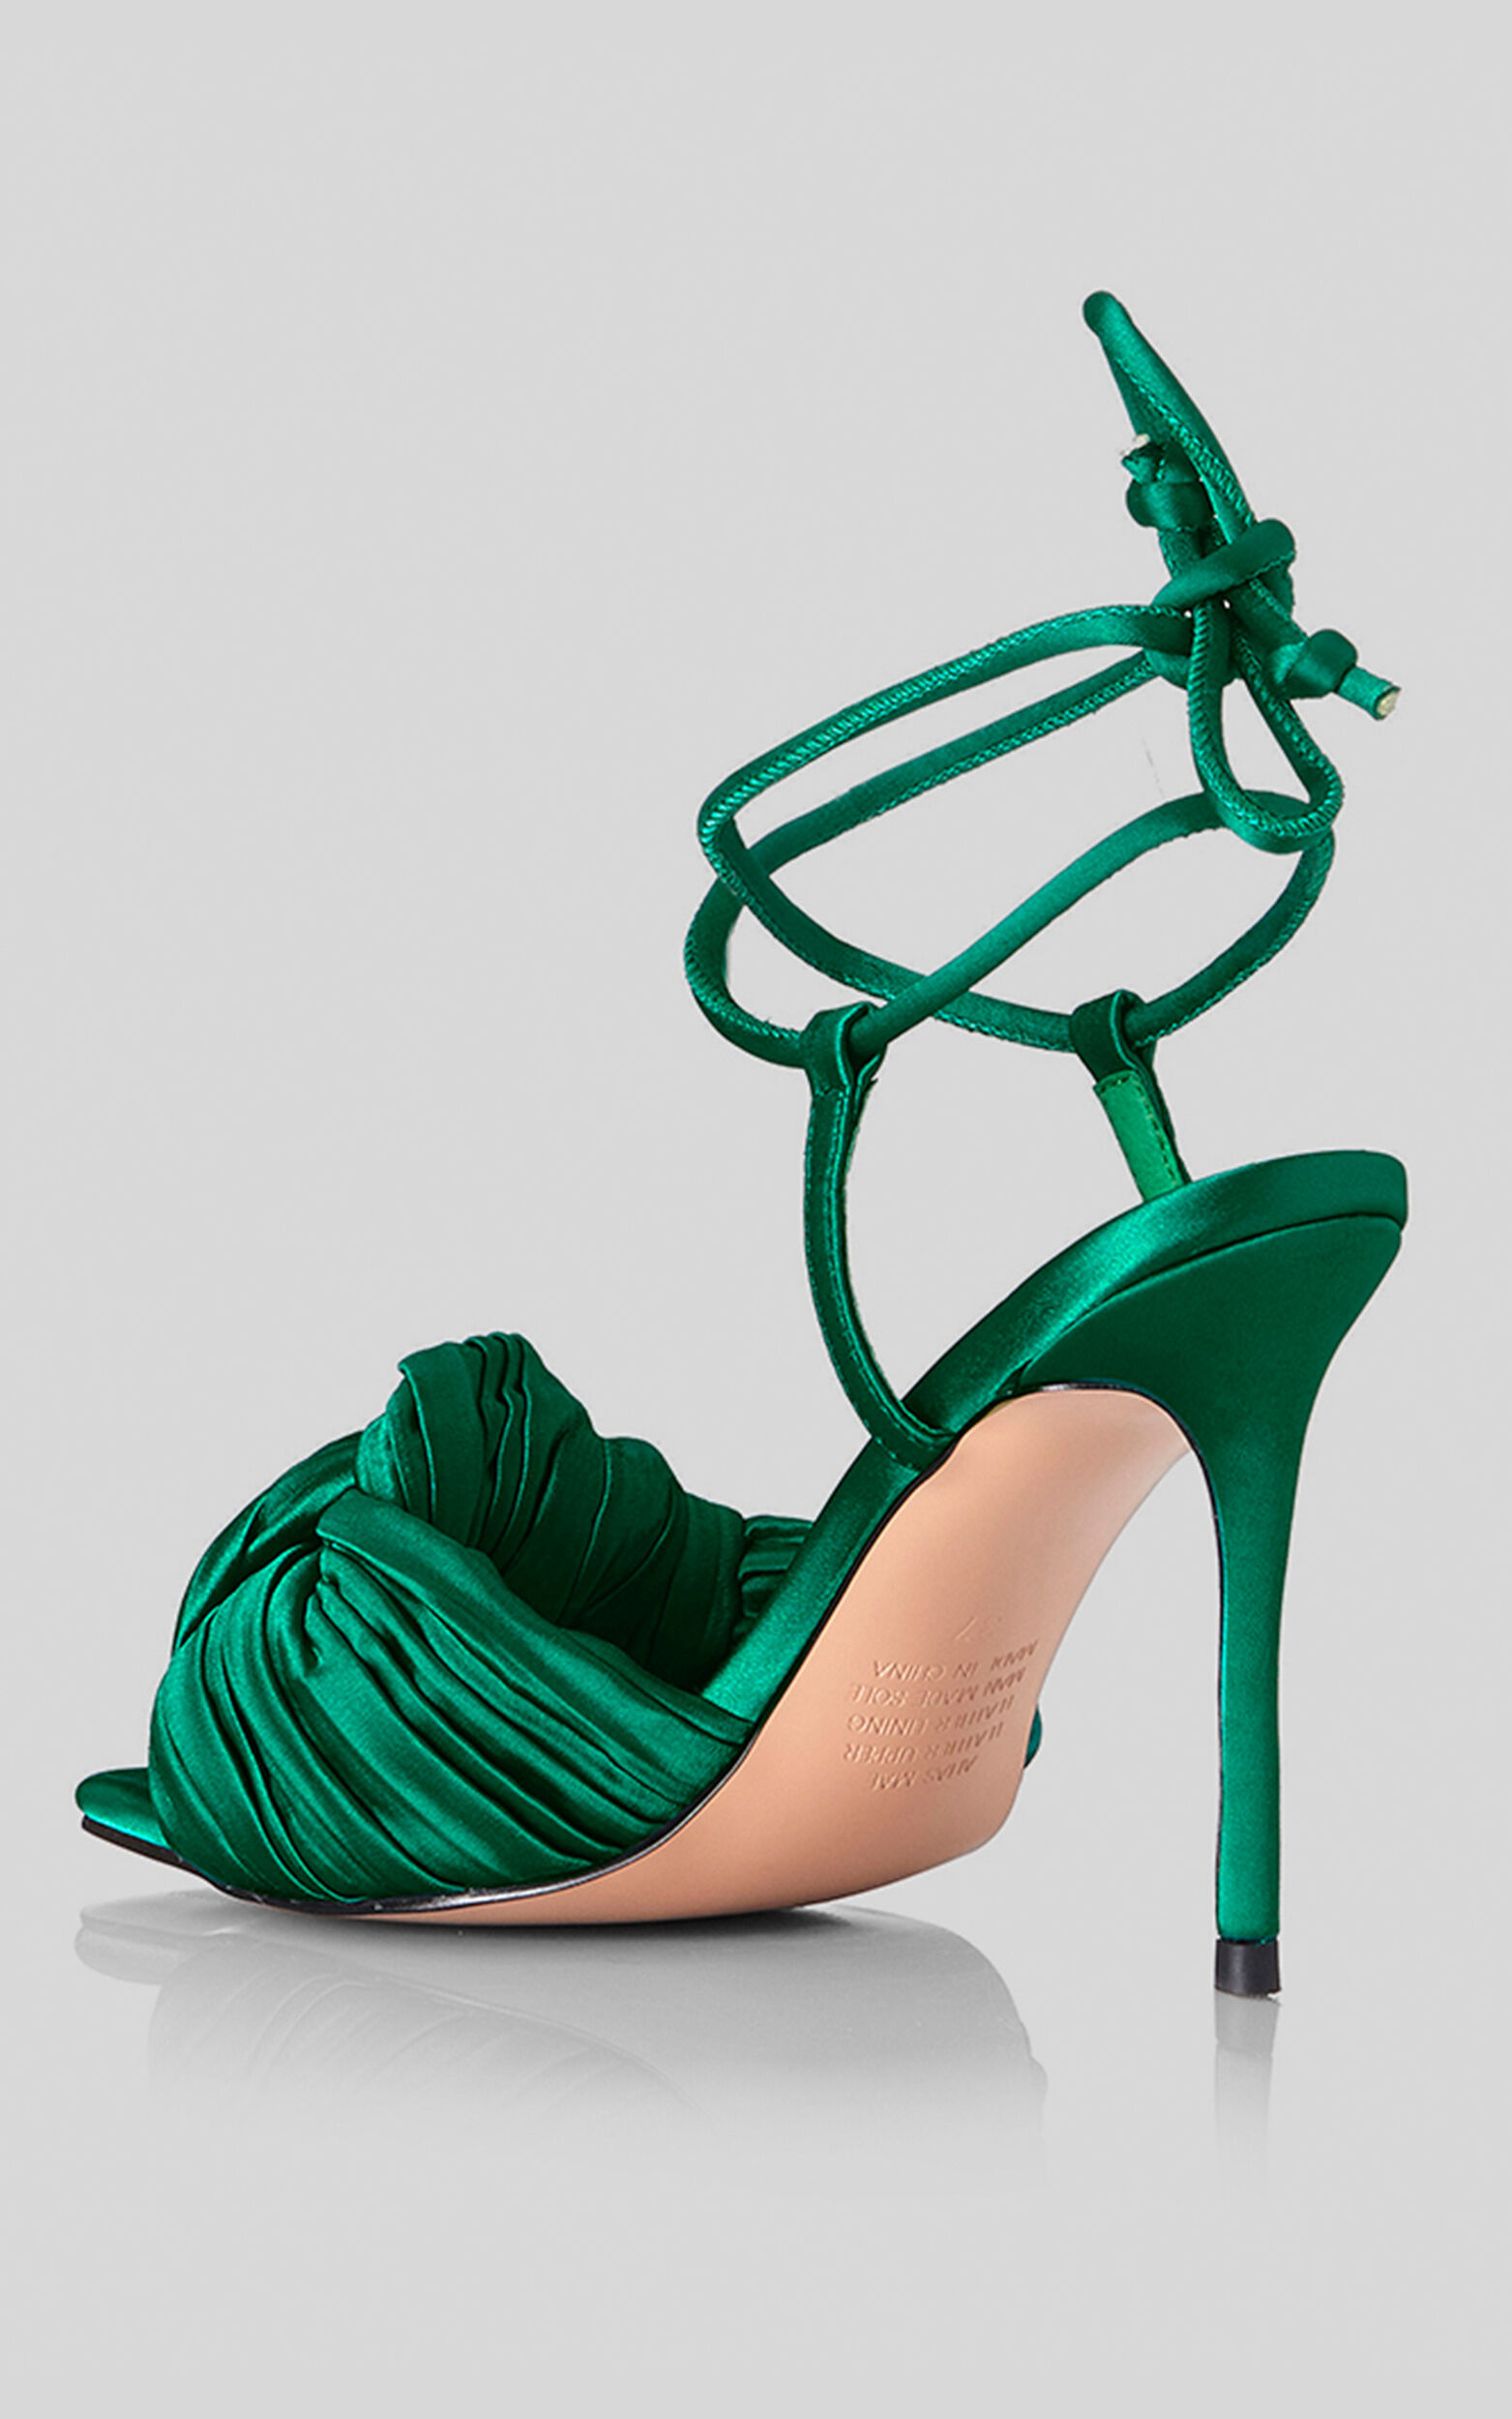 Alias Mae - Mina Heels in Emerald Satin | Showpo